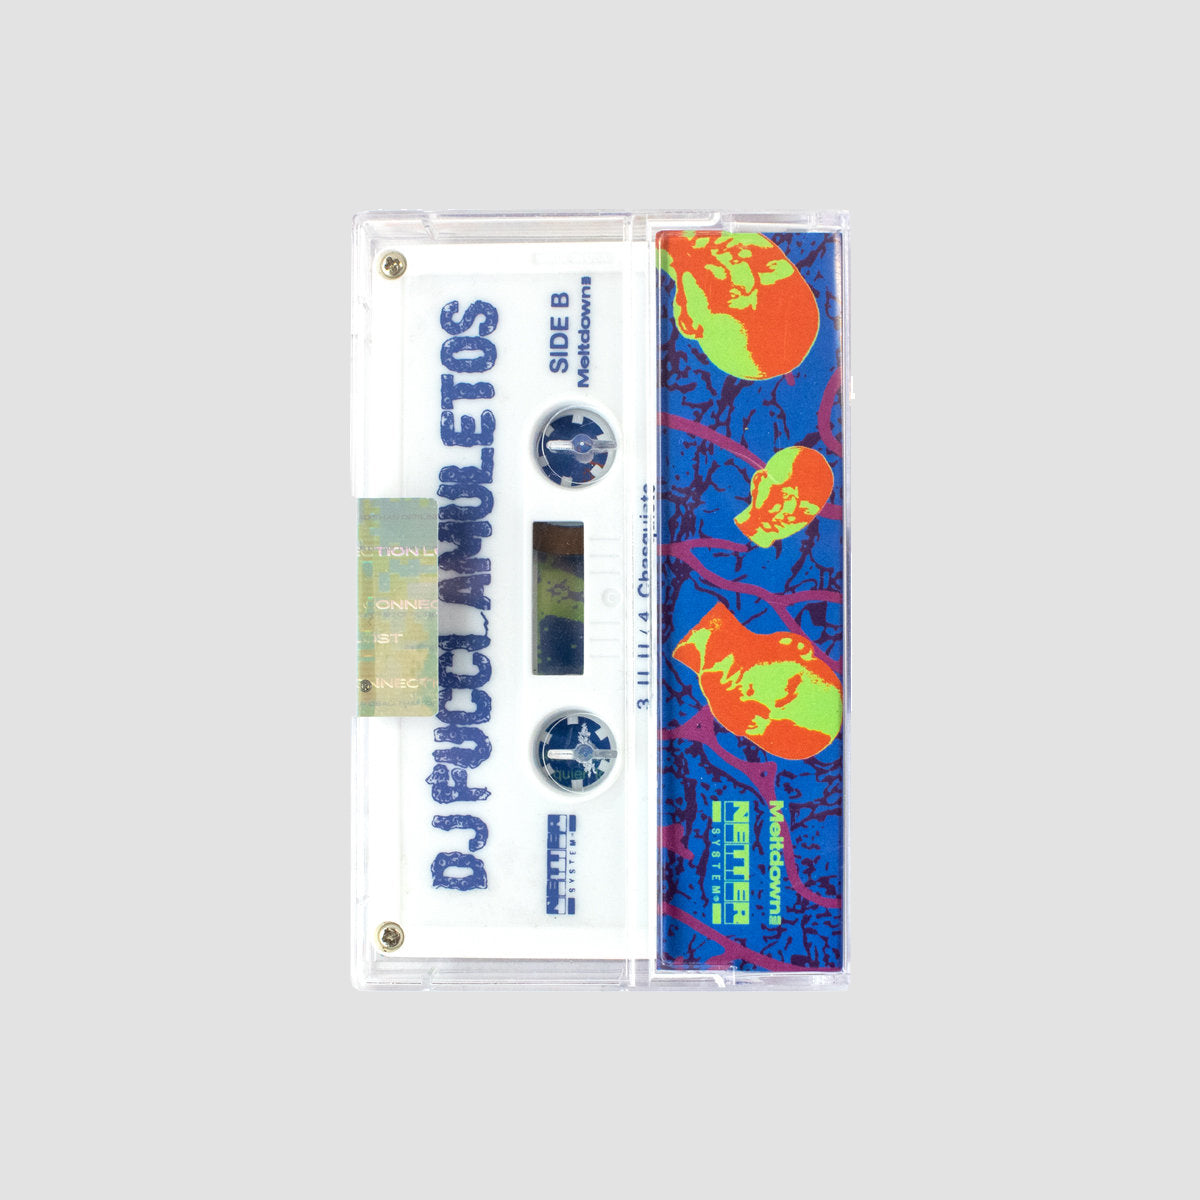 Netter System 003 - DJ Fucci Cassette Tape